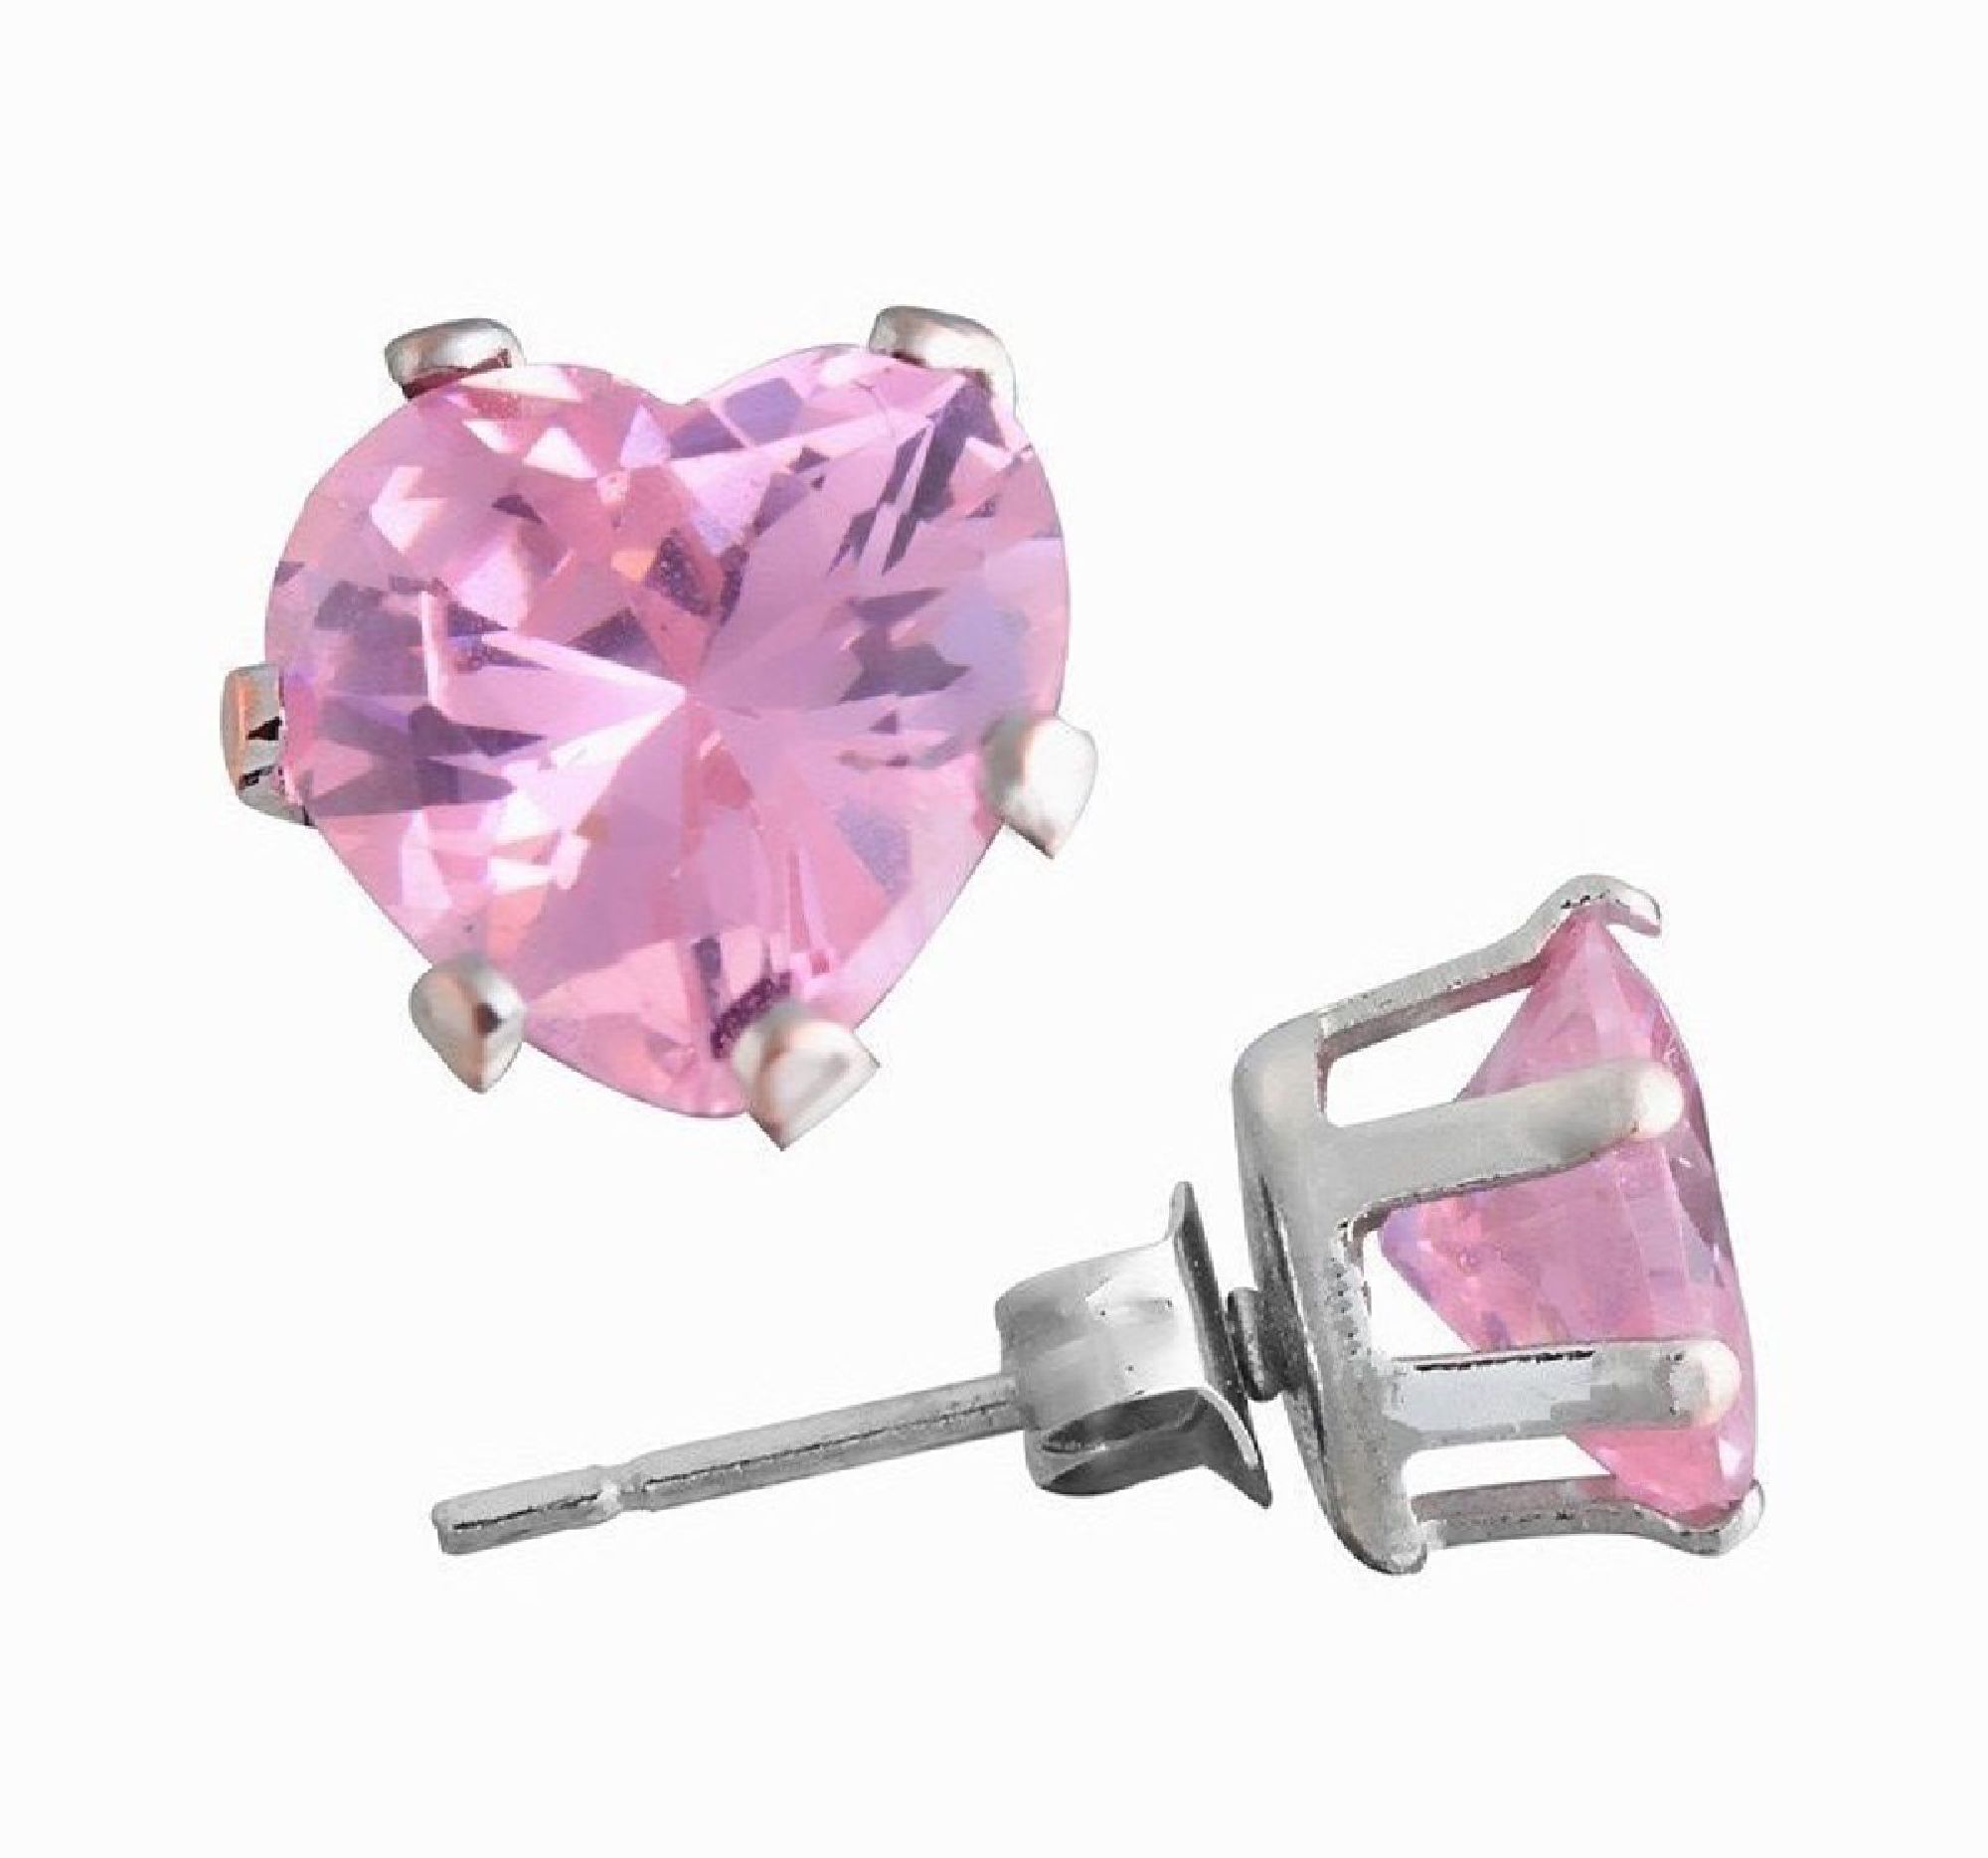 4 Carat Heart Shape Pink Diamond manmade Stud Earrings for Men in 14k White Gold over Sterling Silver Designed in France